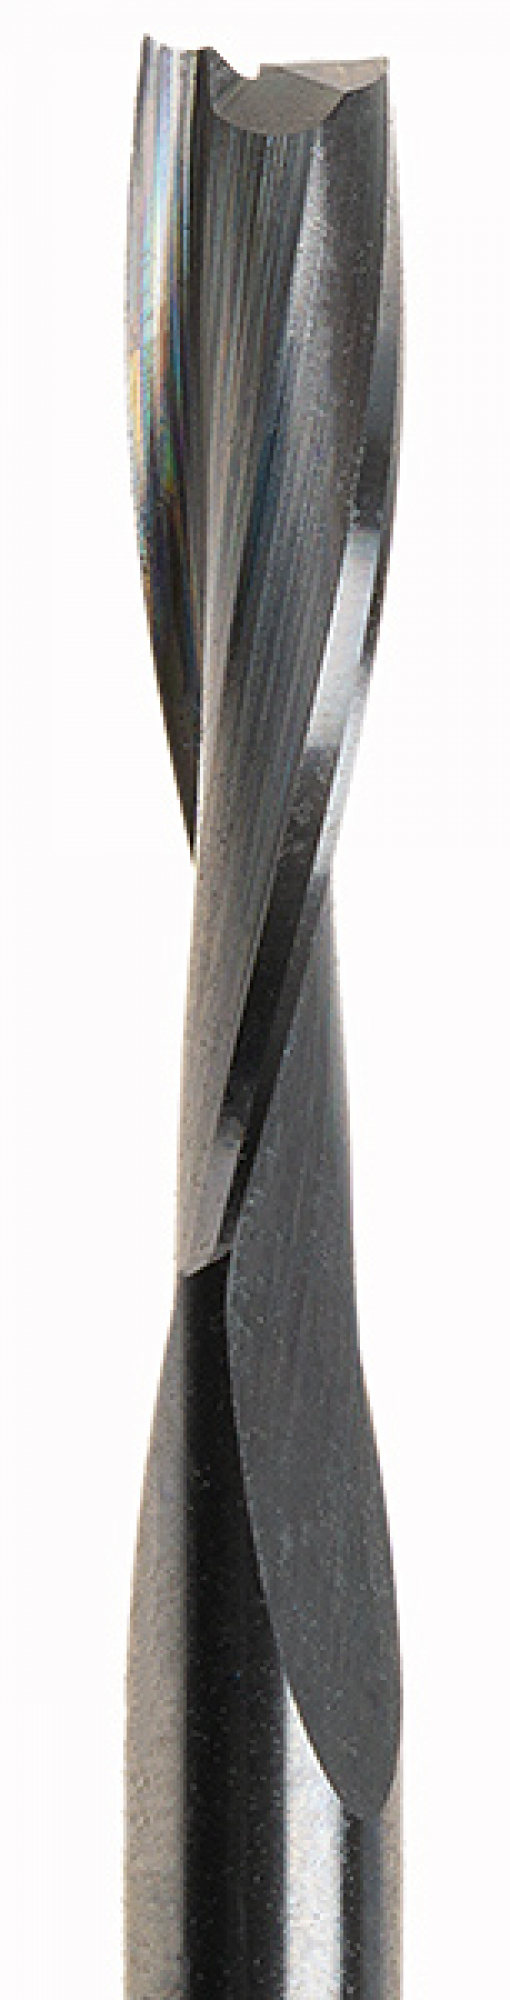 Solid carbide 2-Flute Wood Ø 3 x 12 mm